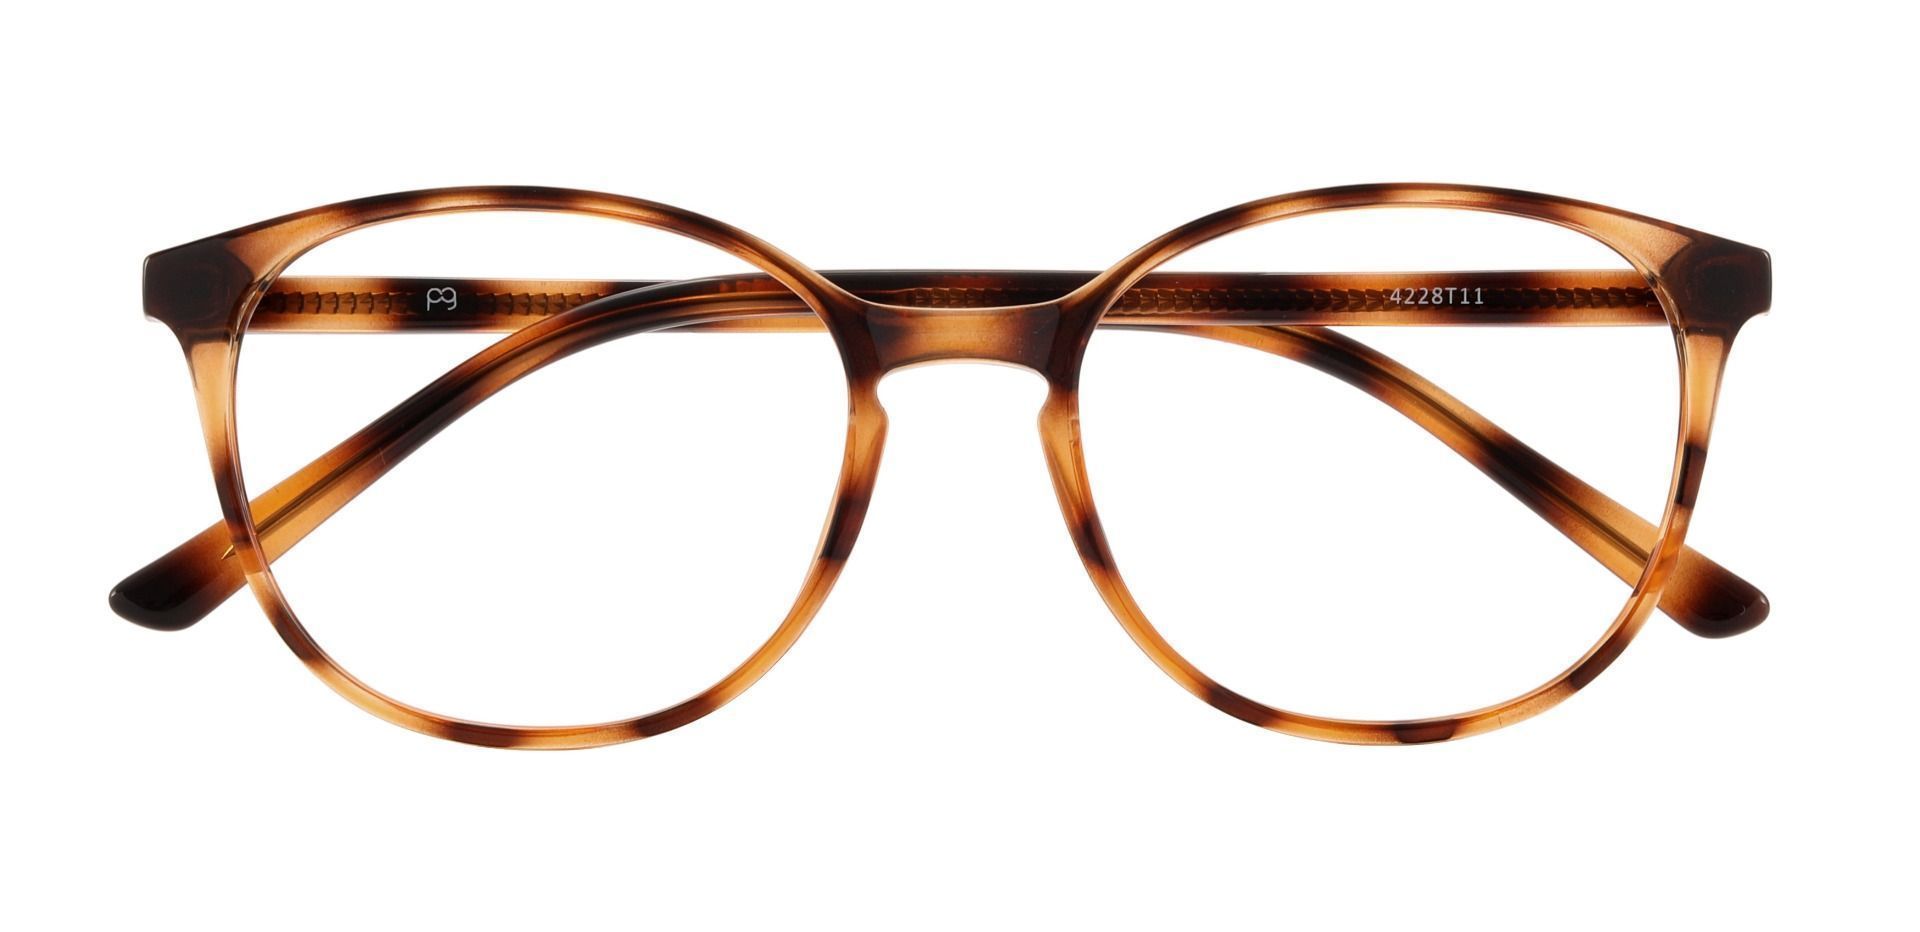 Shanley Oval Non-Rx Glasses - Tortoise